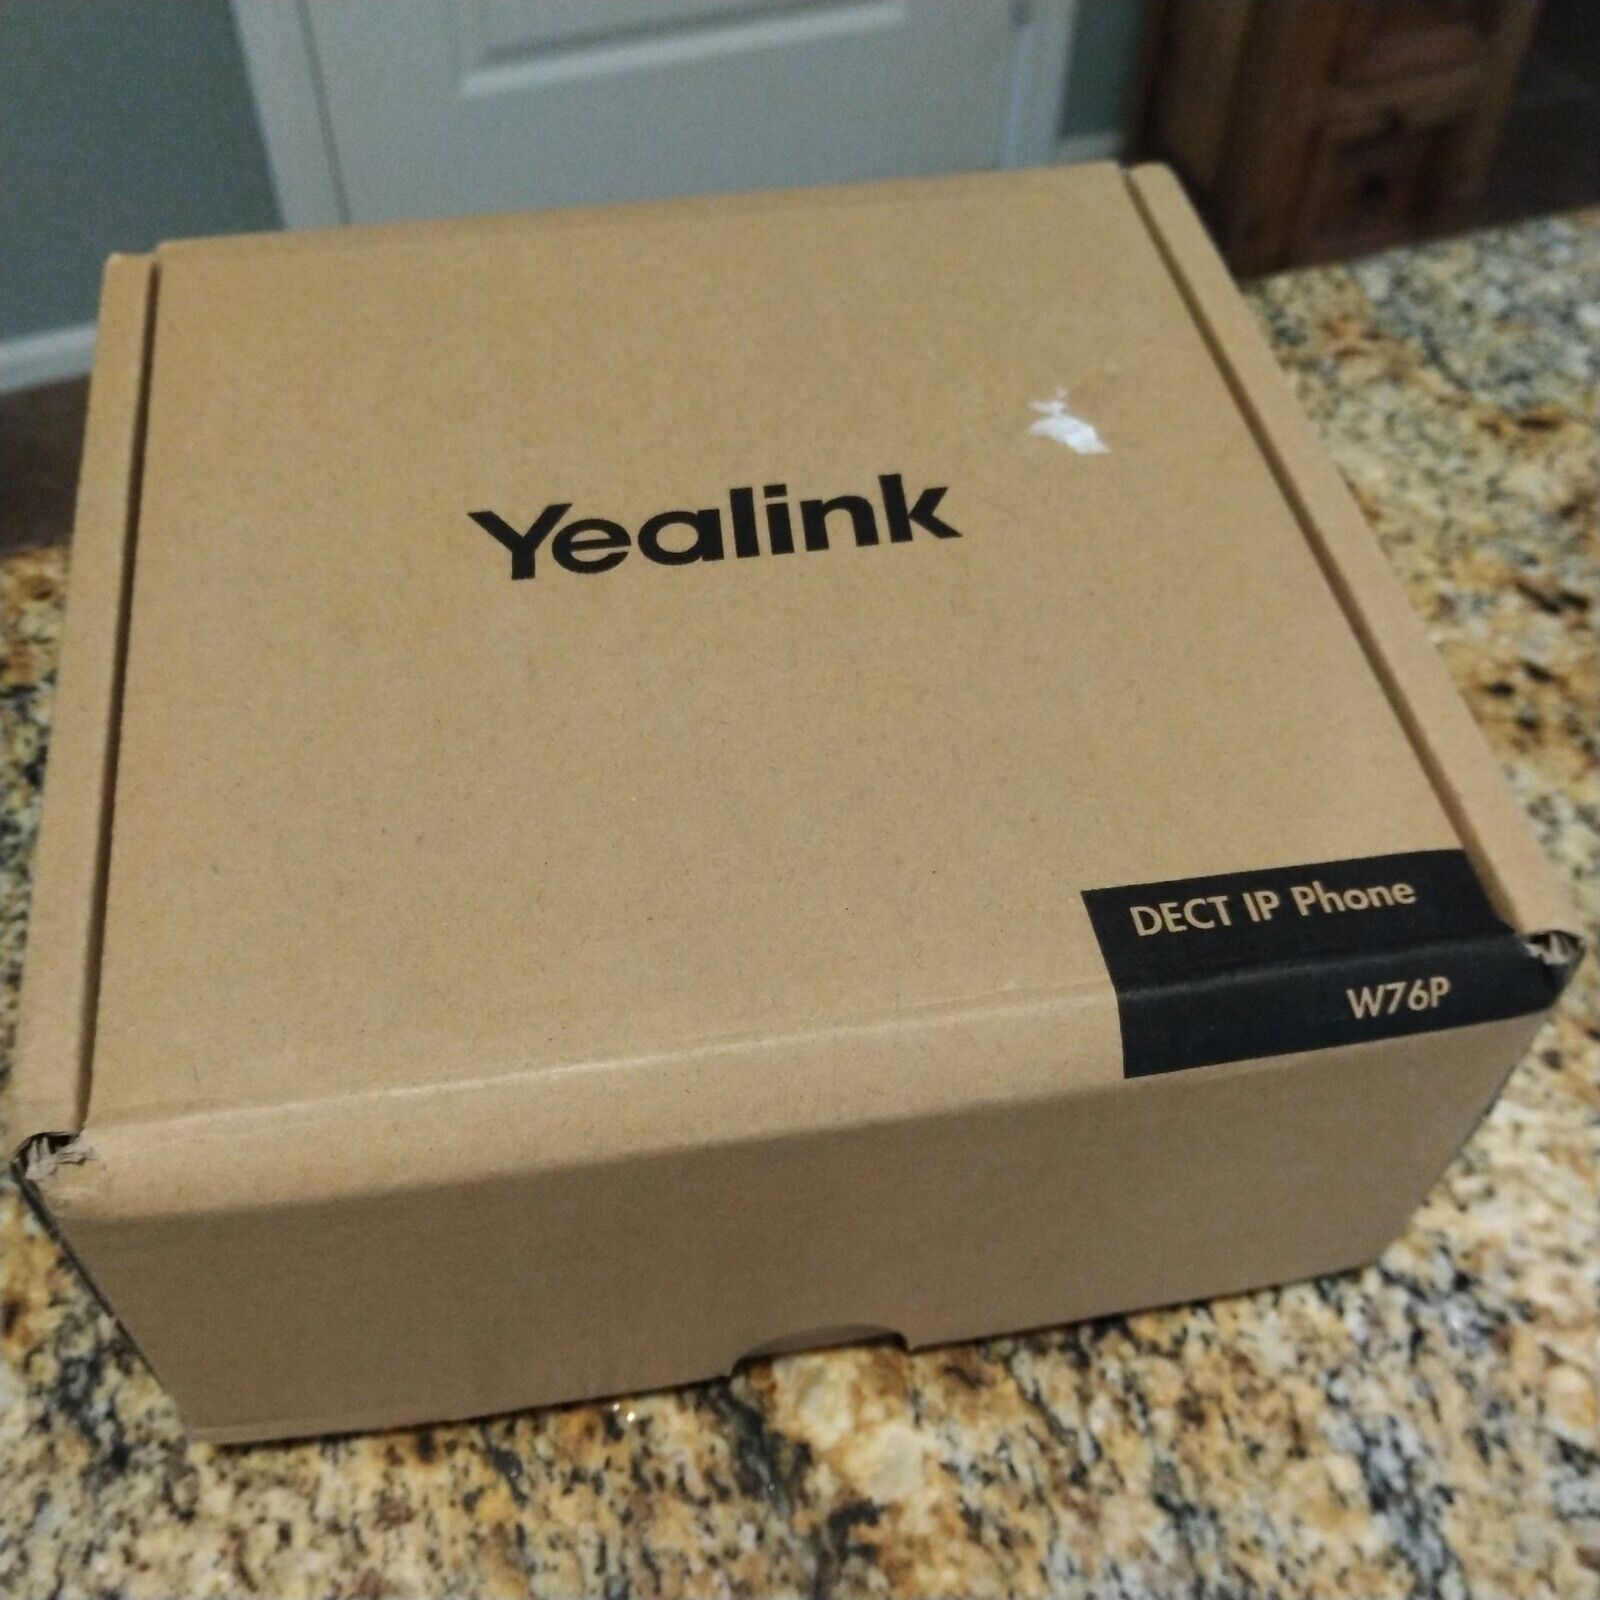 Yealink W76P IP Phone Cordless Corded DECT Wall Mountable Desktop New Open Box